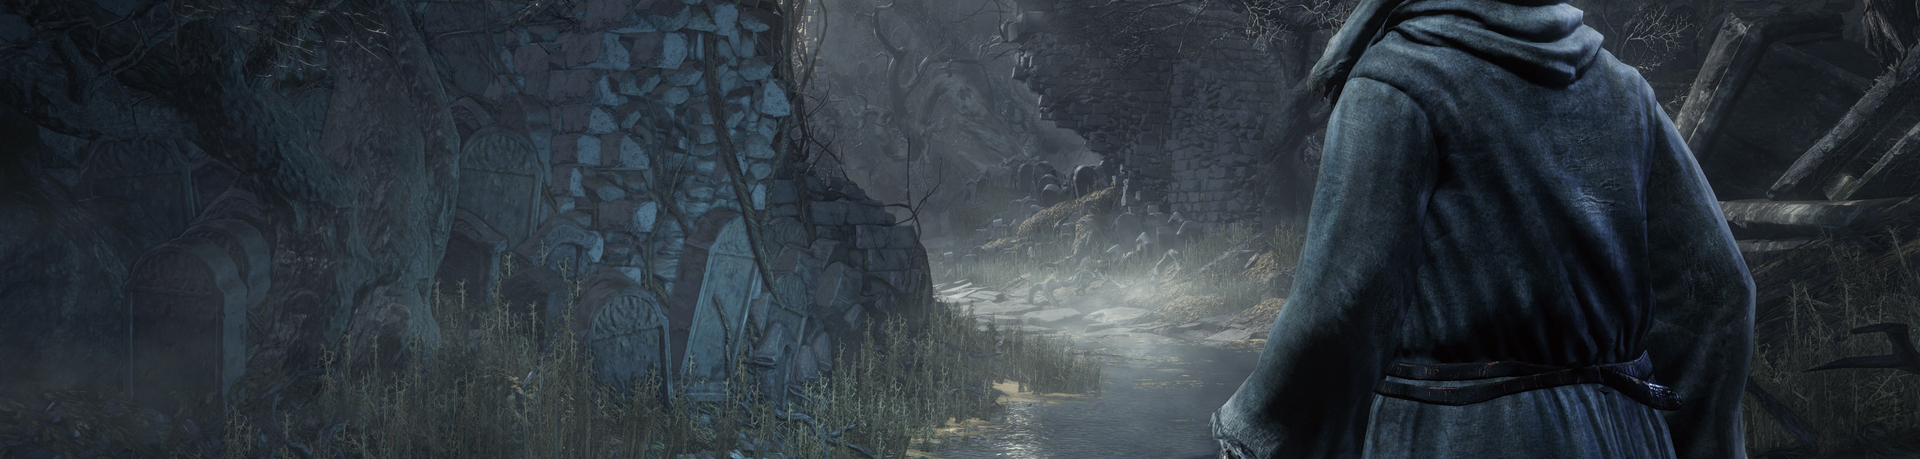 Dark Souls III - Special Edition and Screenshots